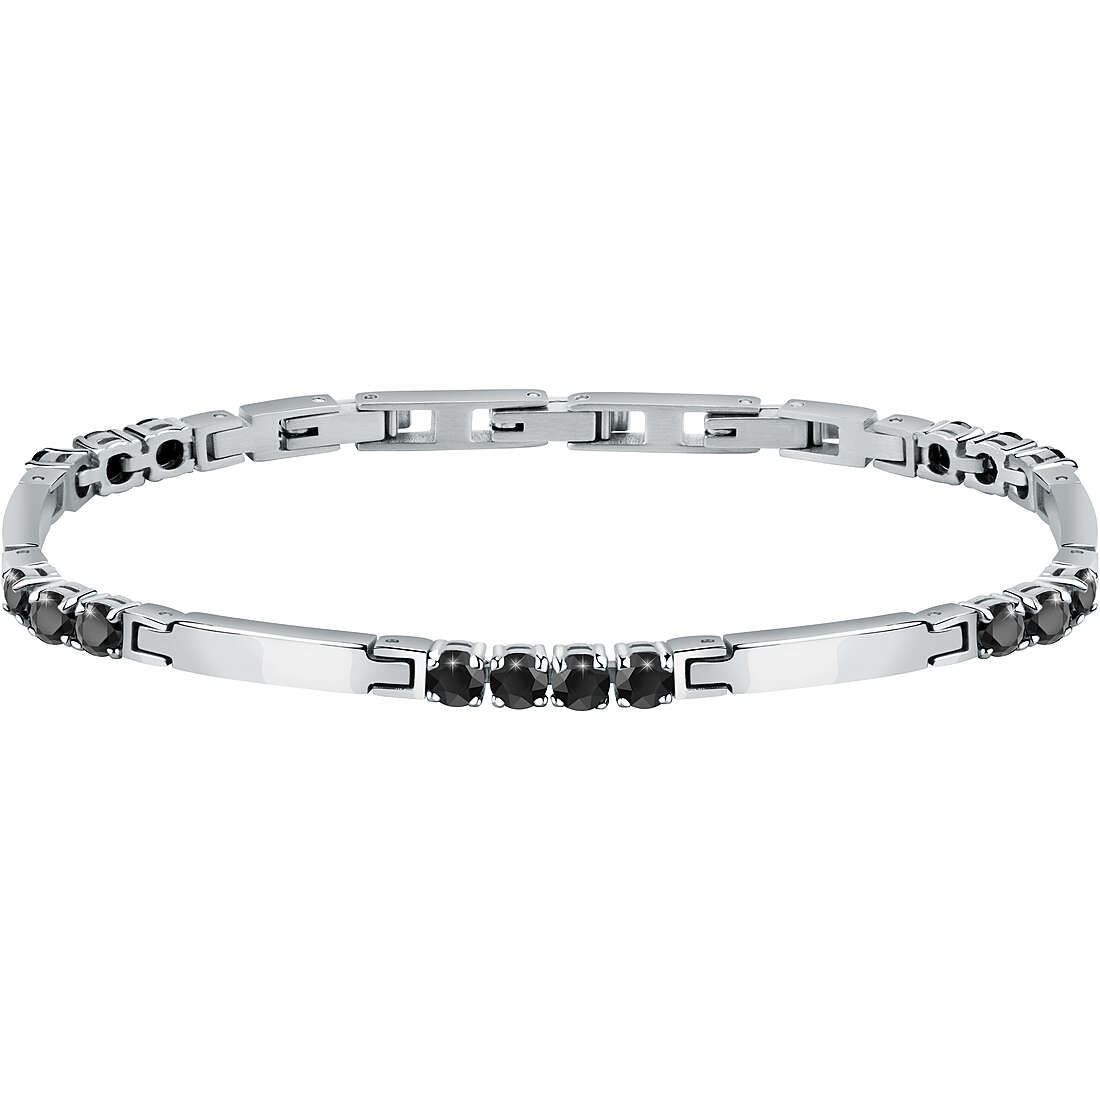 bracelet man jewellery Morellato Tennis SAEV46